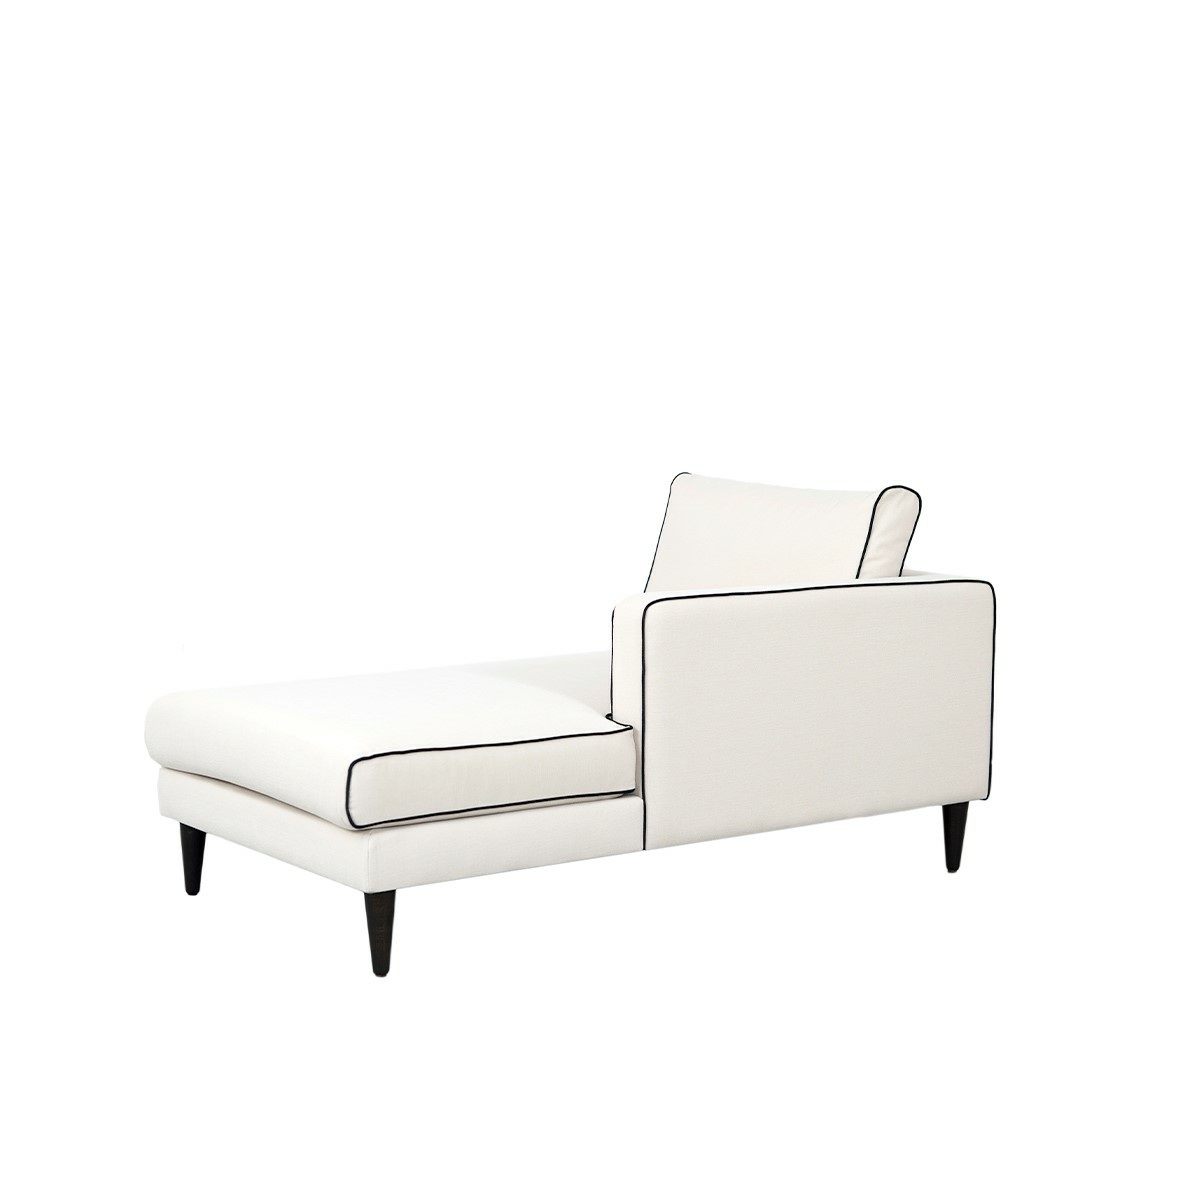 Noa sofa - Right armrest, Different Sizes - Cotton - image 3